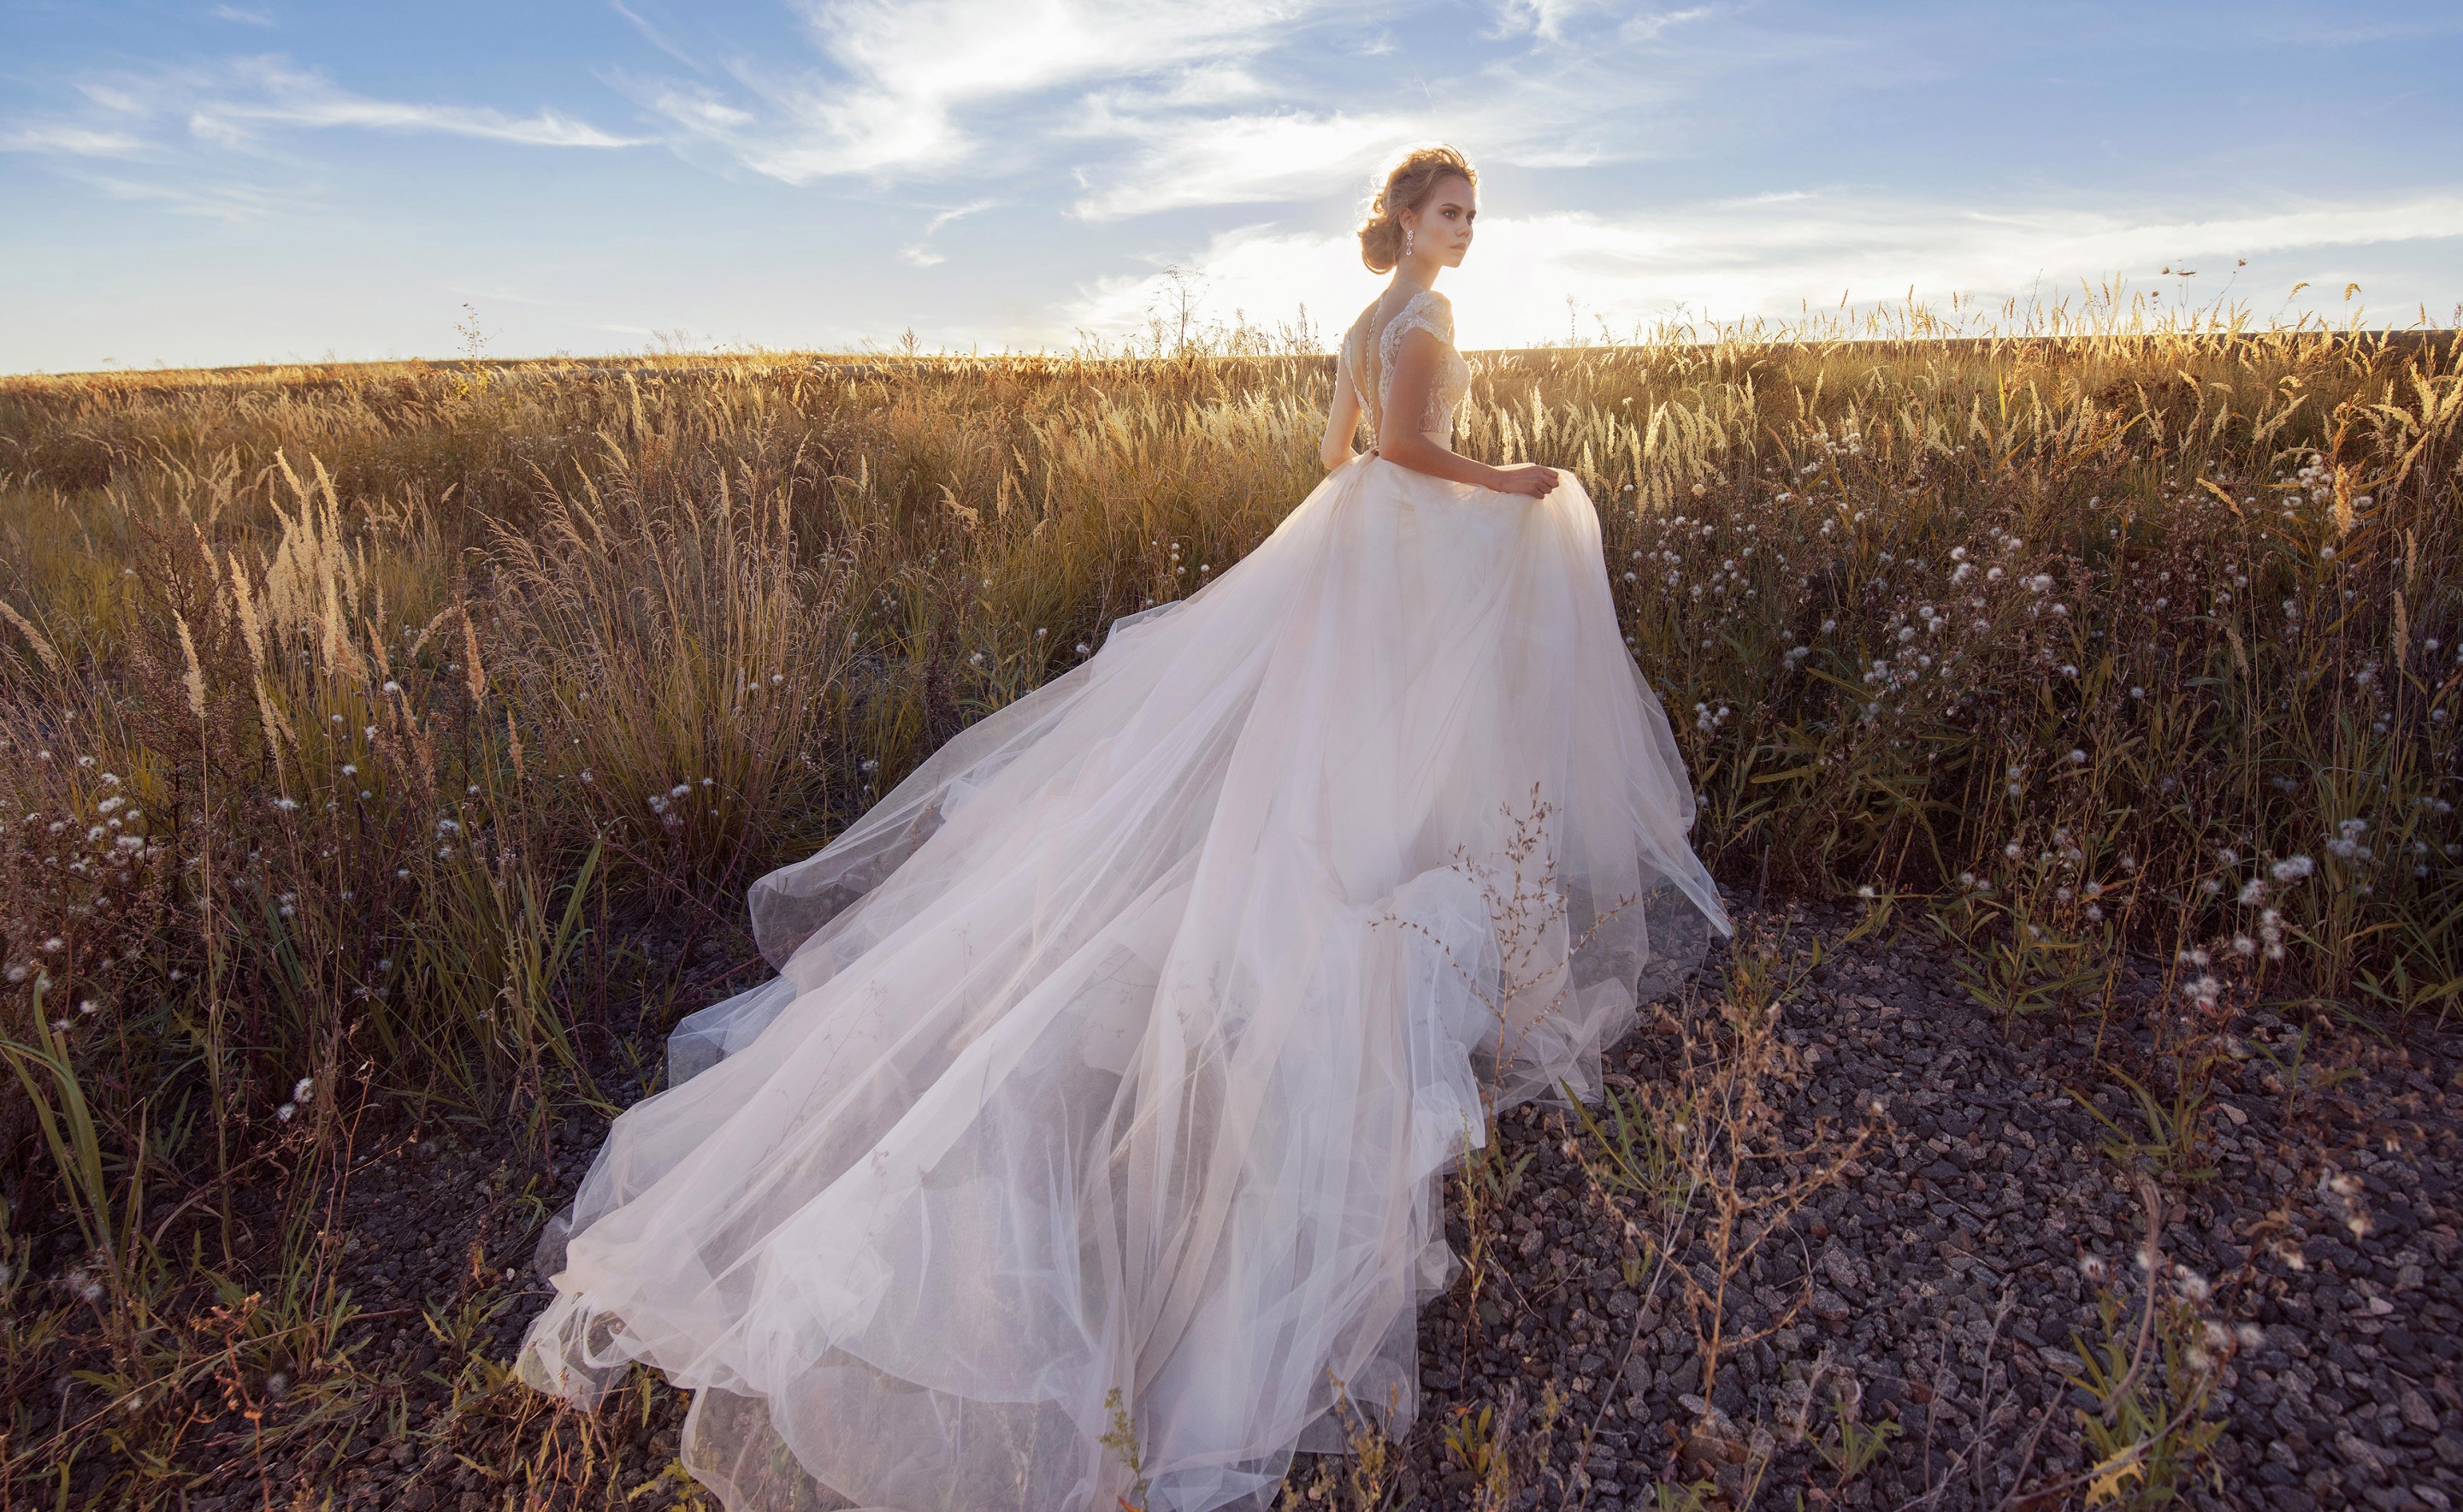 Blonde Bride Girl Model Wedding Dress White Dress Woman 2880x1768